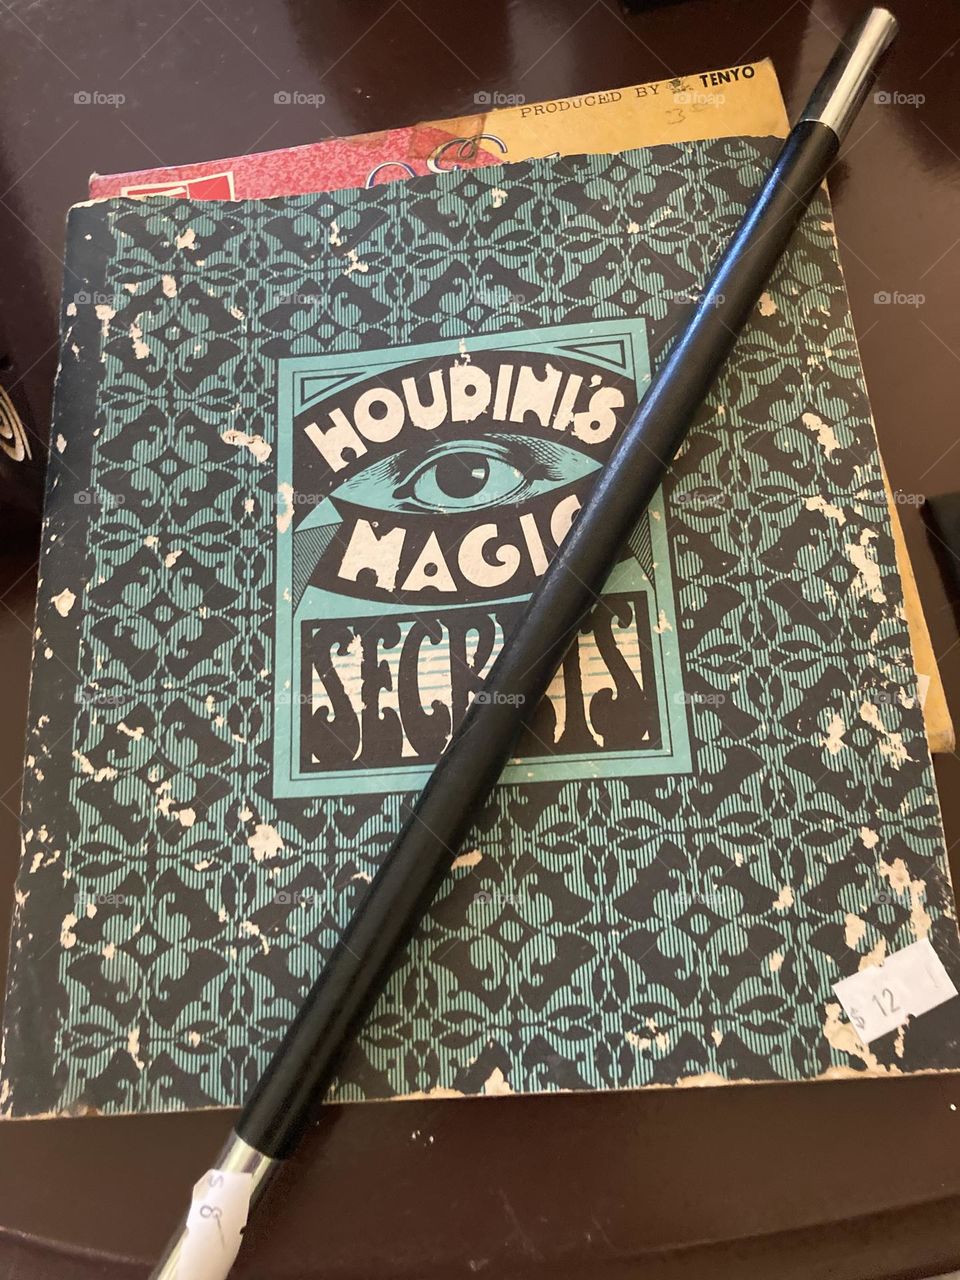 Houdini magic book and wand